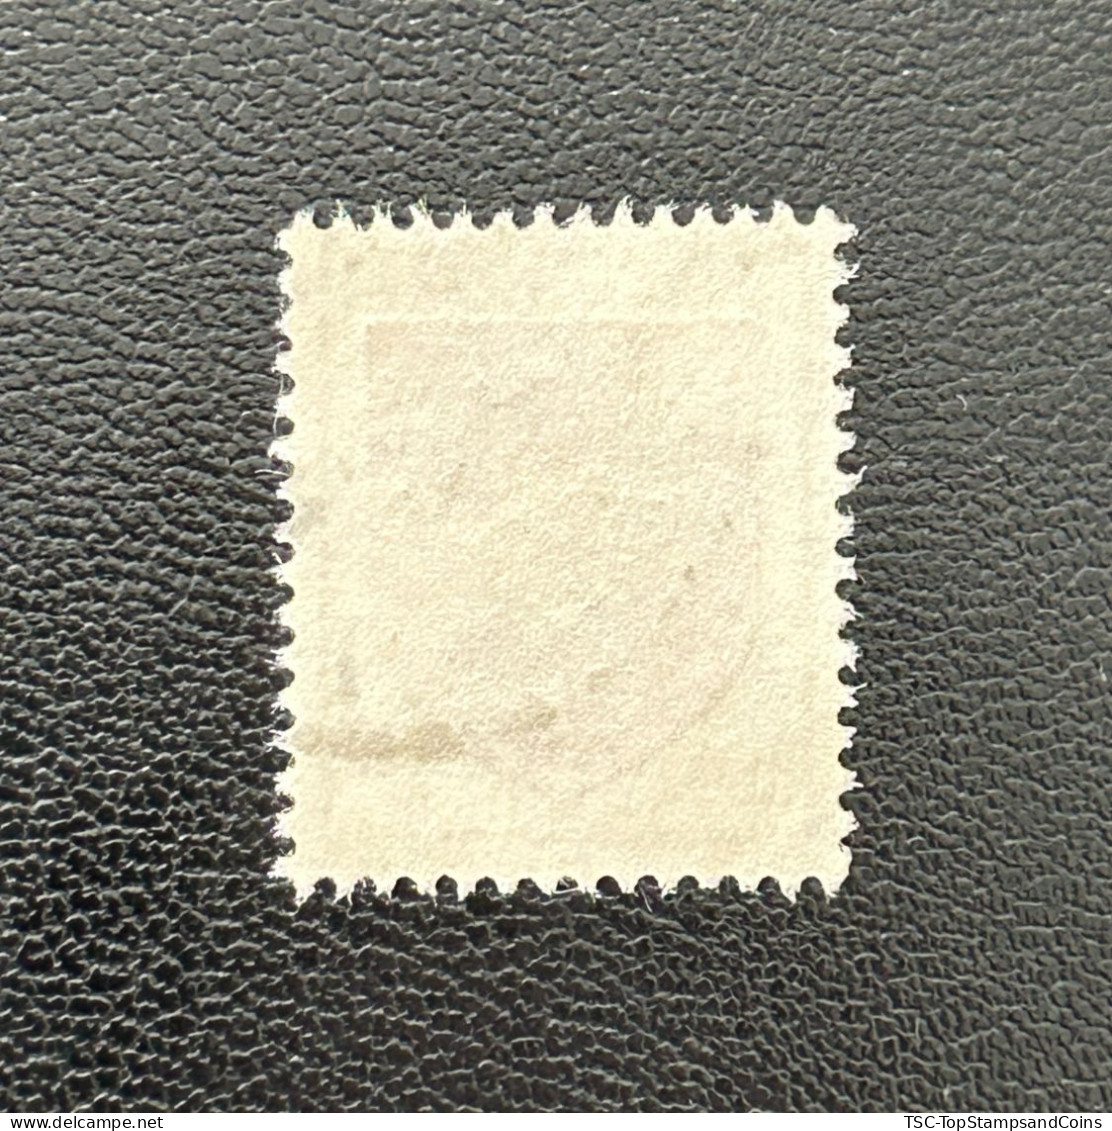 FRA1004U7 - Armoiries De Provinces (VII) - Aunis - 3 F Used Stamp - 1954 - France YT 1004 - 1941-66 Armoiries Et Blasons